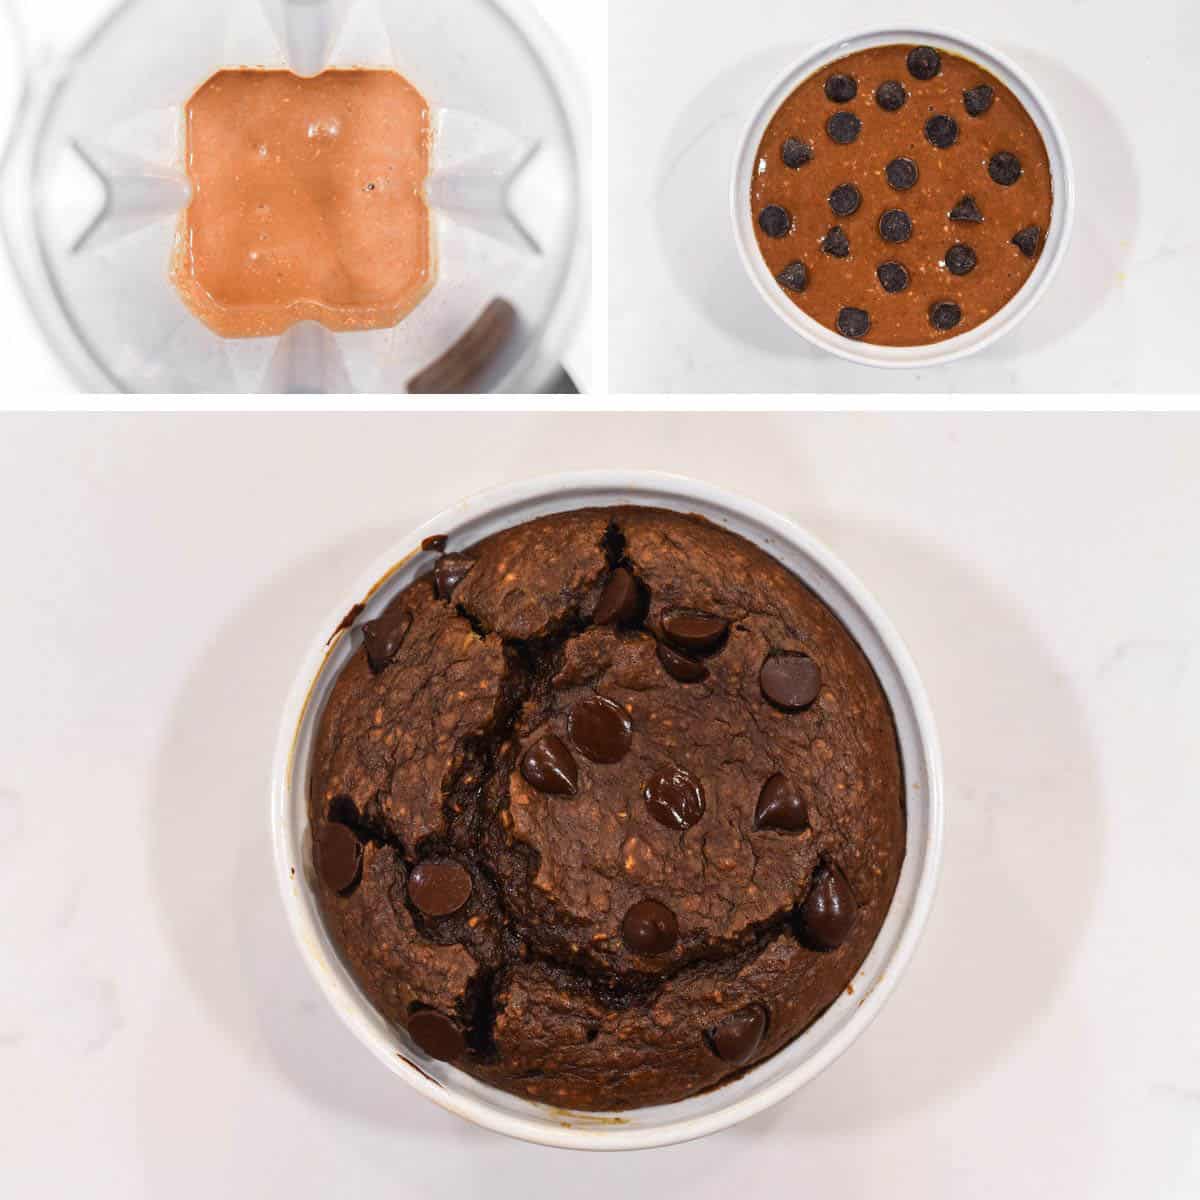 process shots of blending ingredients in blender before adding to ramekin and baking